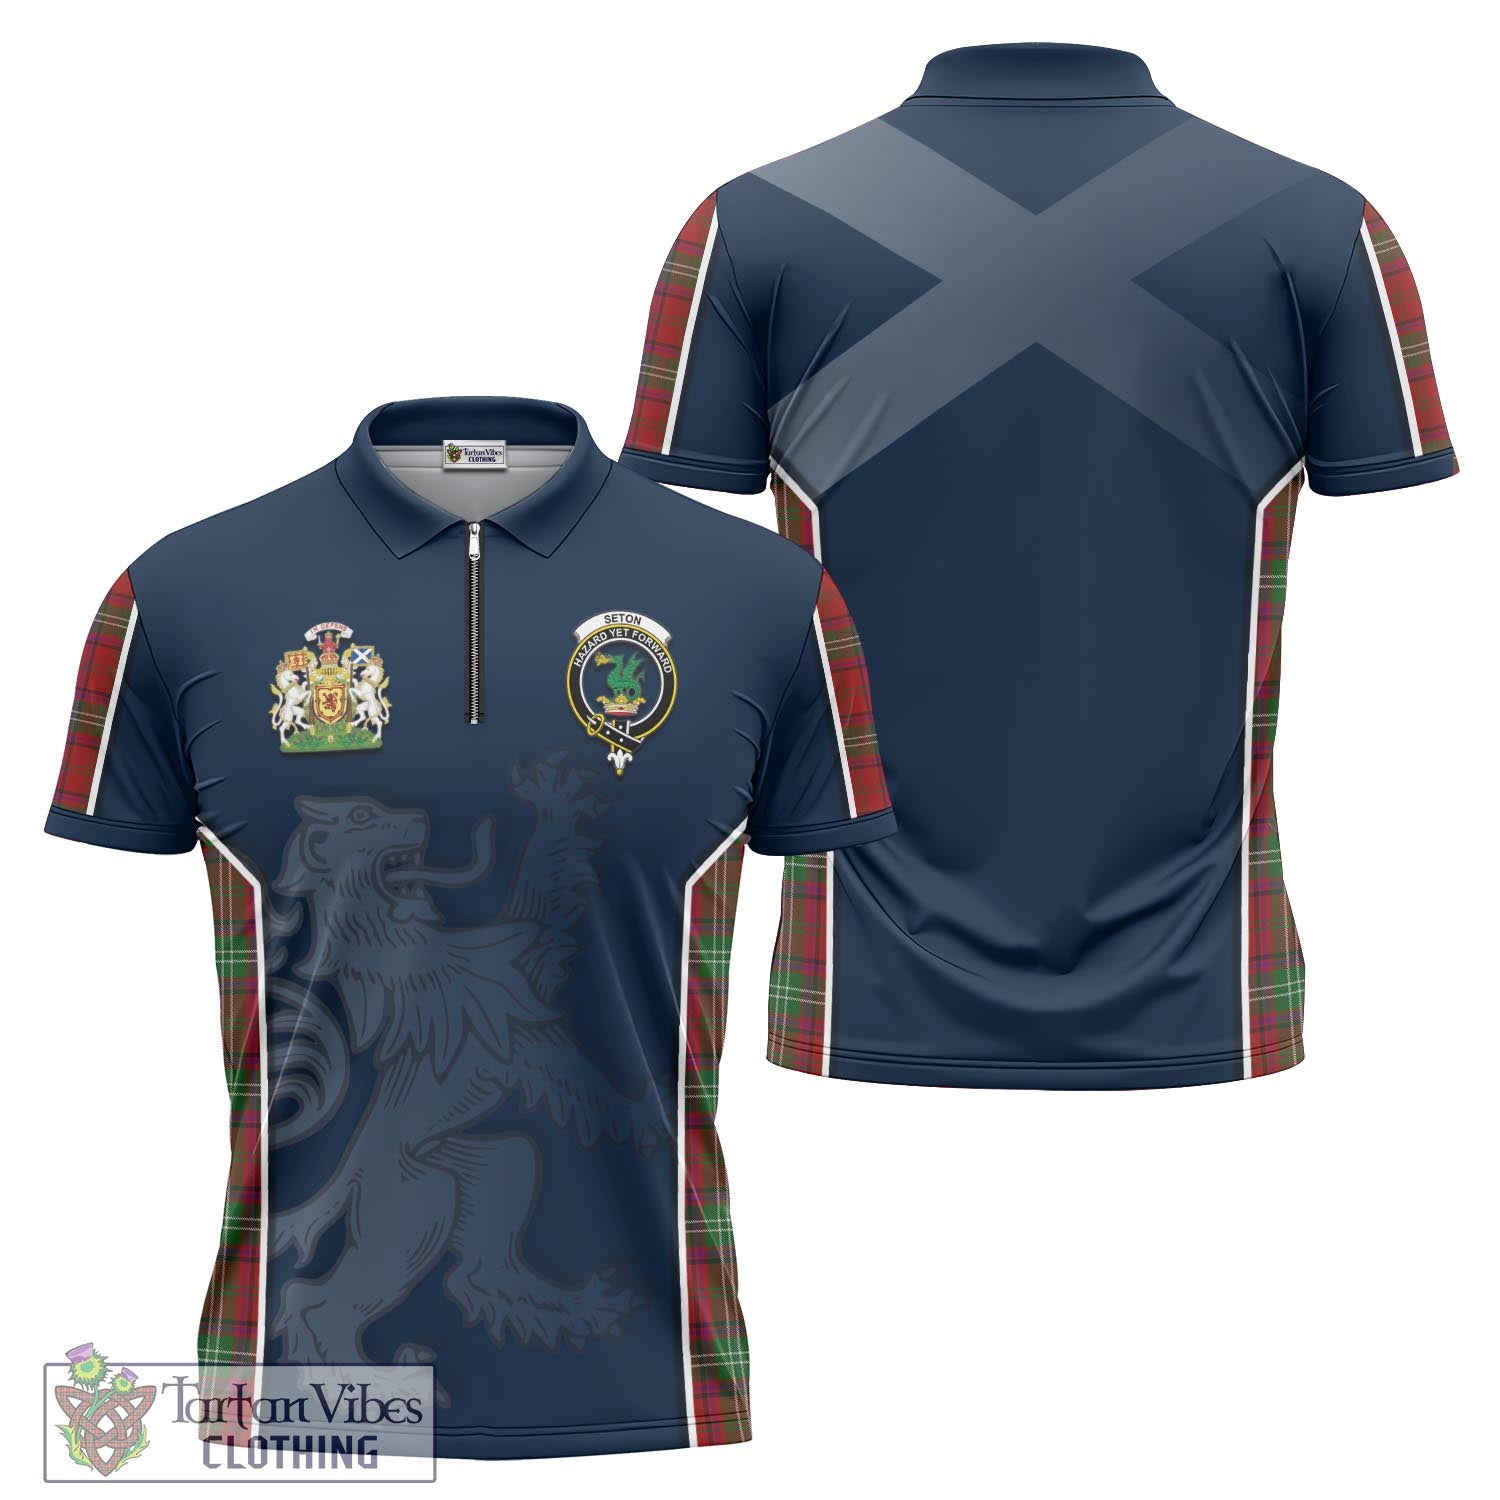 Tartan Vibes Clothing Seton Tartan Zipper Polo Shirt with Family Crest and Lion Rampant Vibes Sport Style